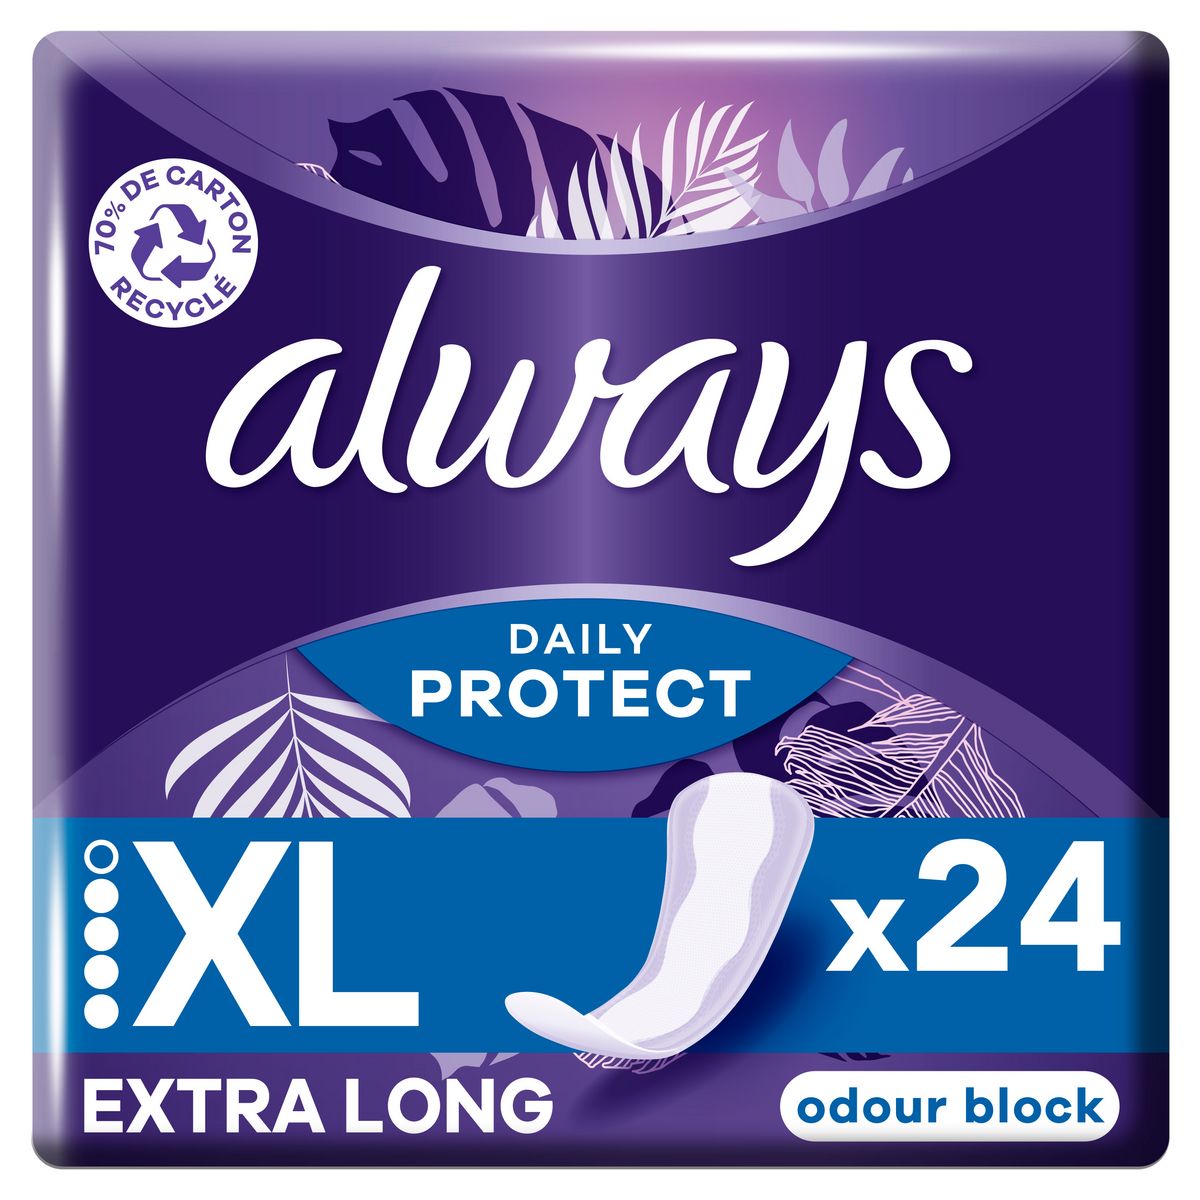 ALWAYS Daily Protect Serviettes hygiéniques XL extra long 24 serviettes